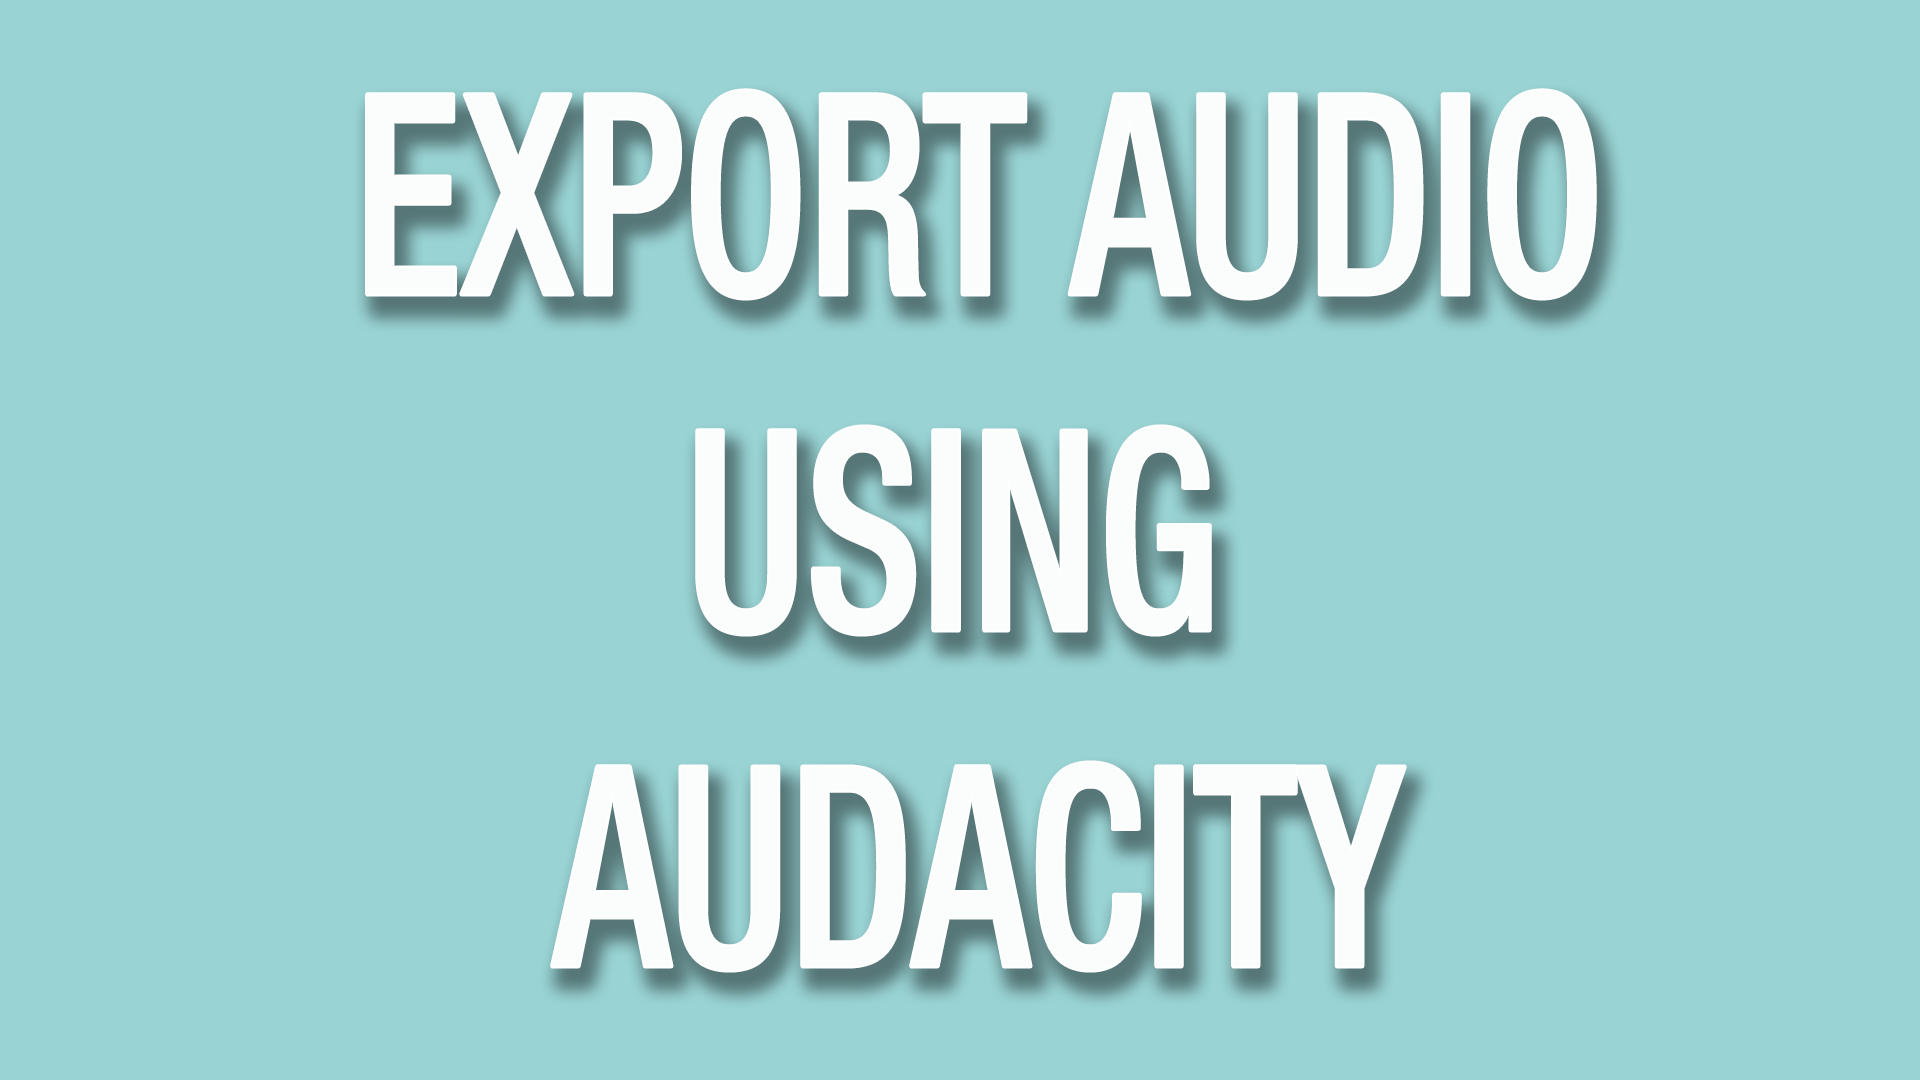 Export Audio from Audacity